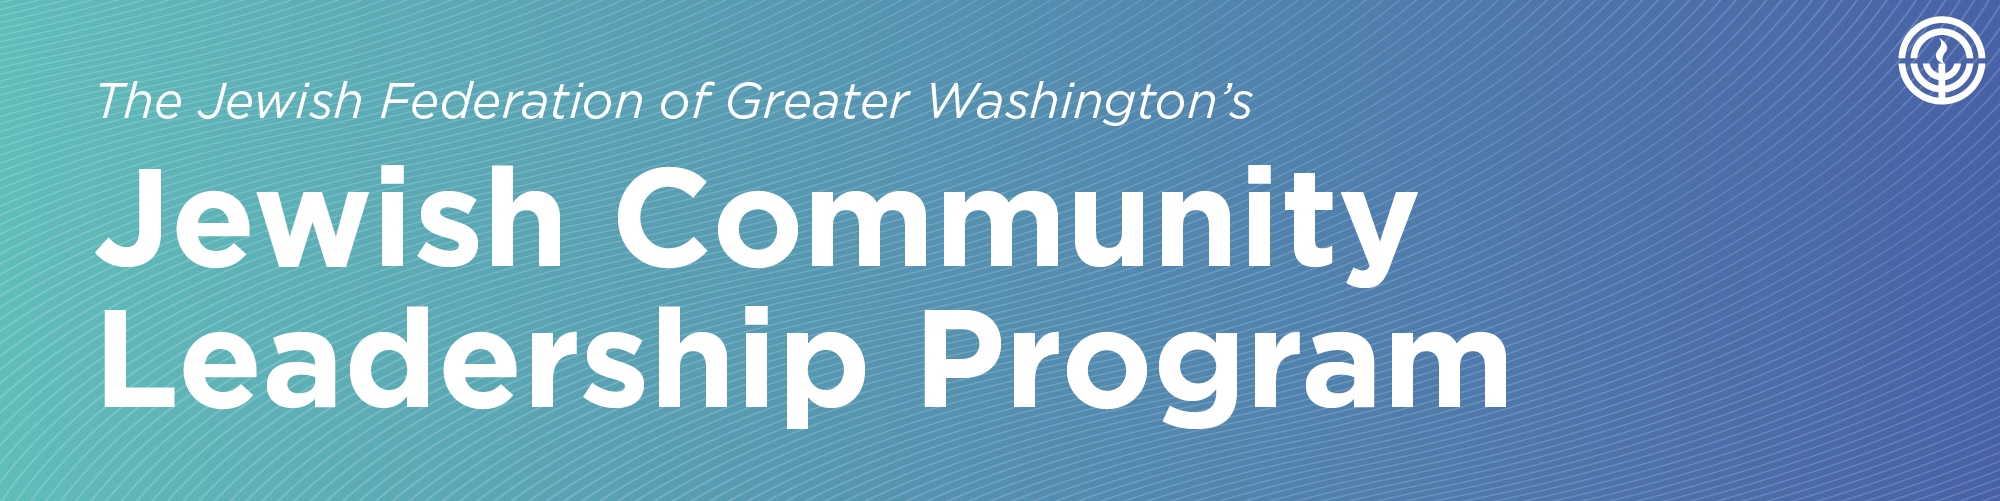 The Jewish Federation of Greater Washington's Jewish Community Leadership Program on blue banner